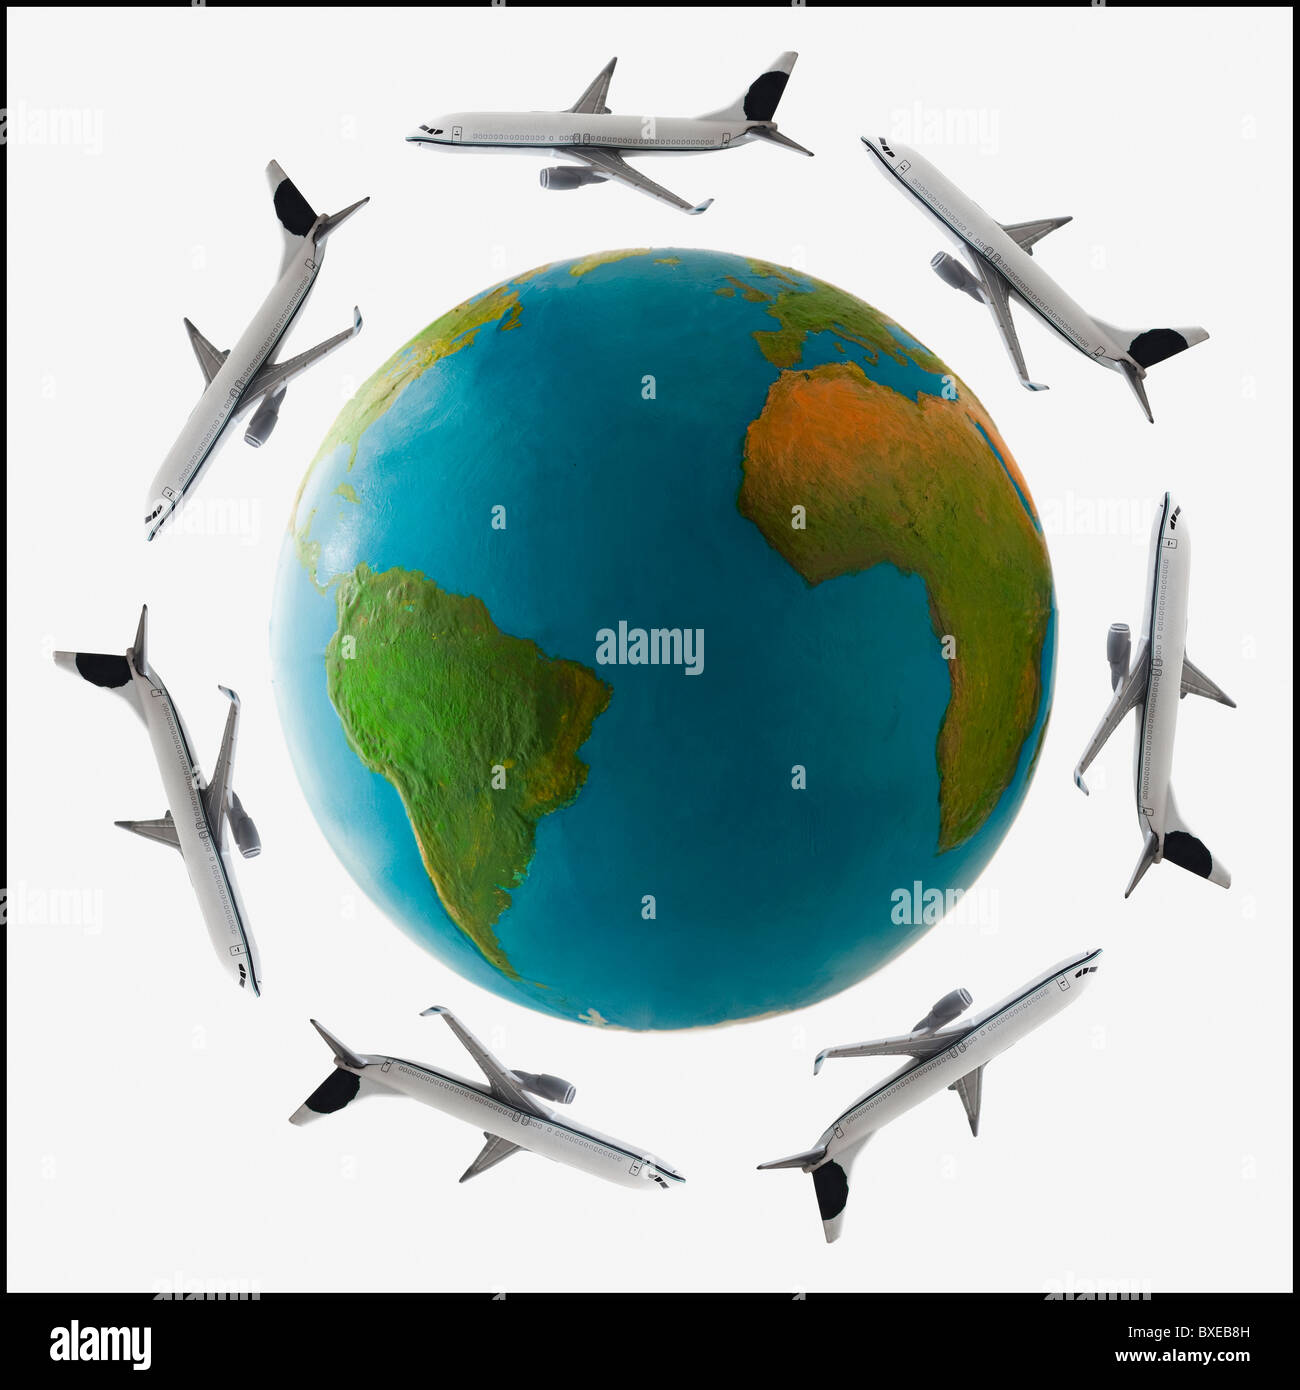 Jets flying around globe Stock Photo